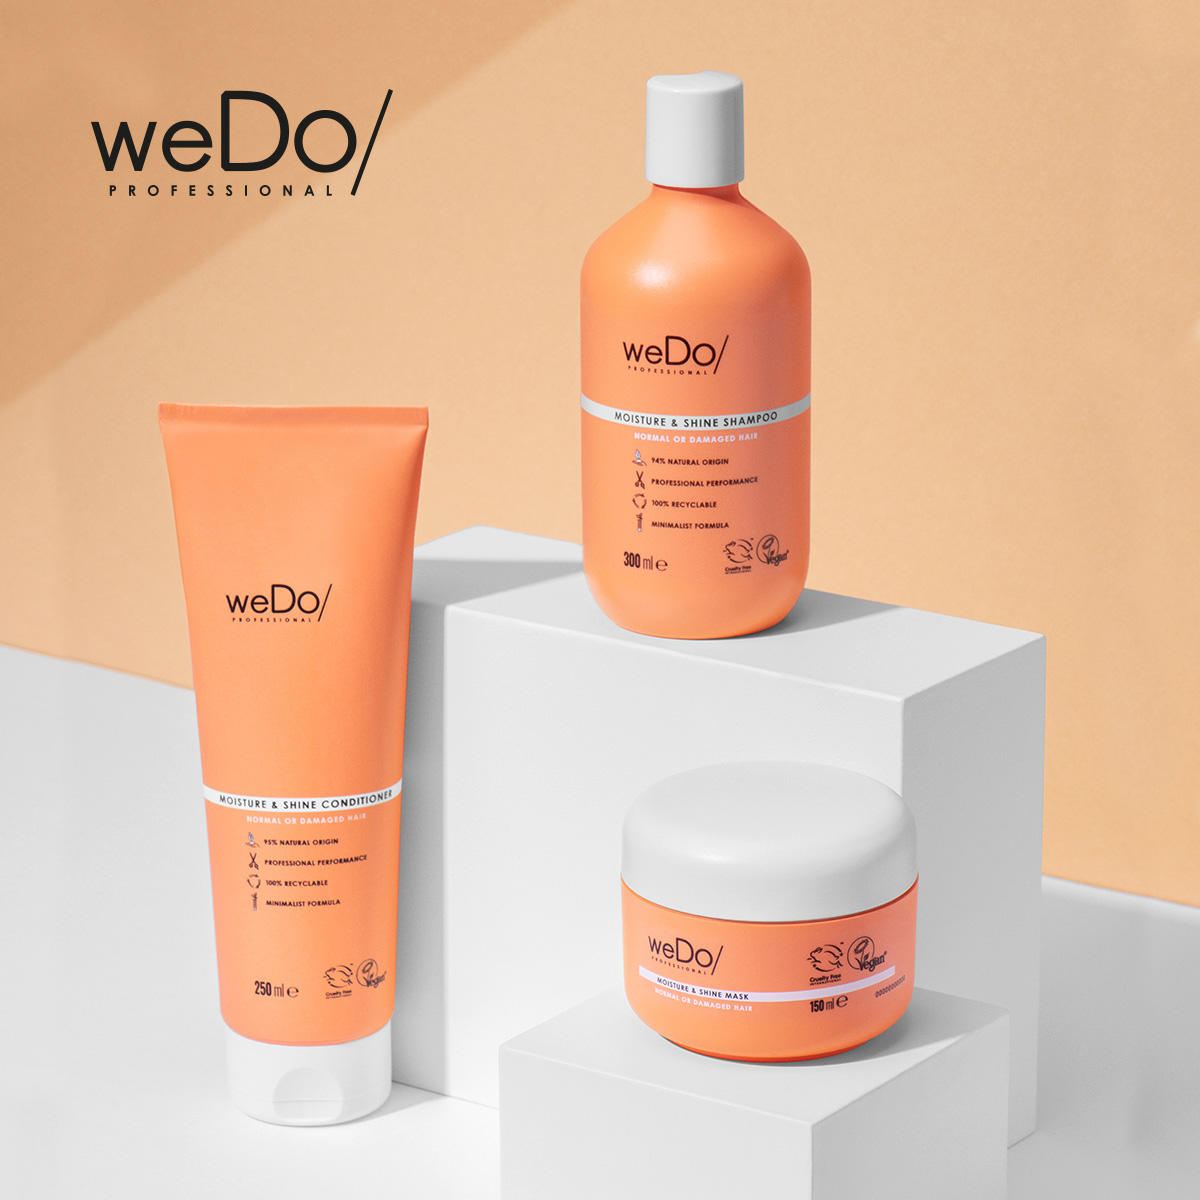 weDo/ Moisture & Shine Shampoo 100 ml - 8